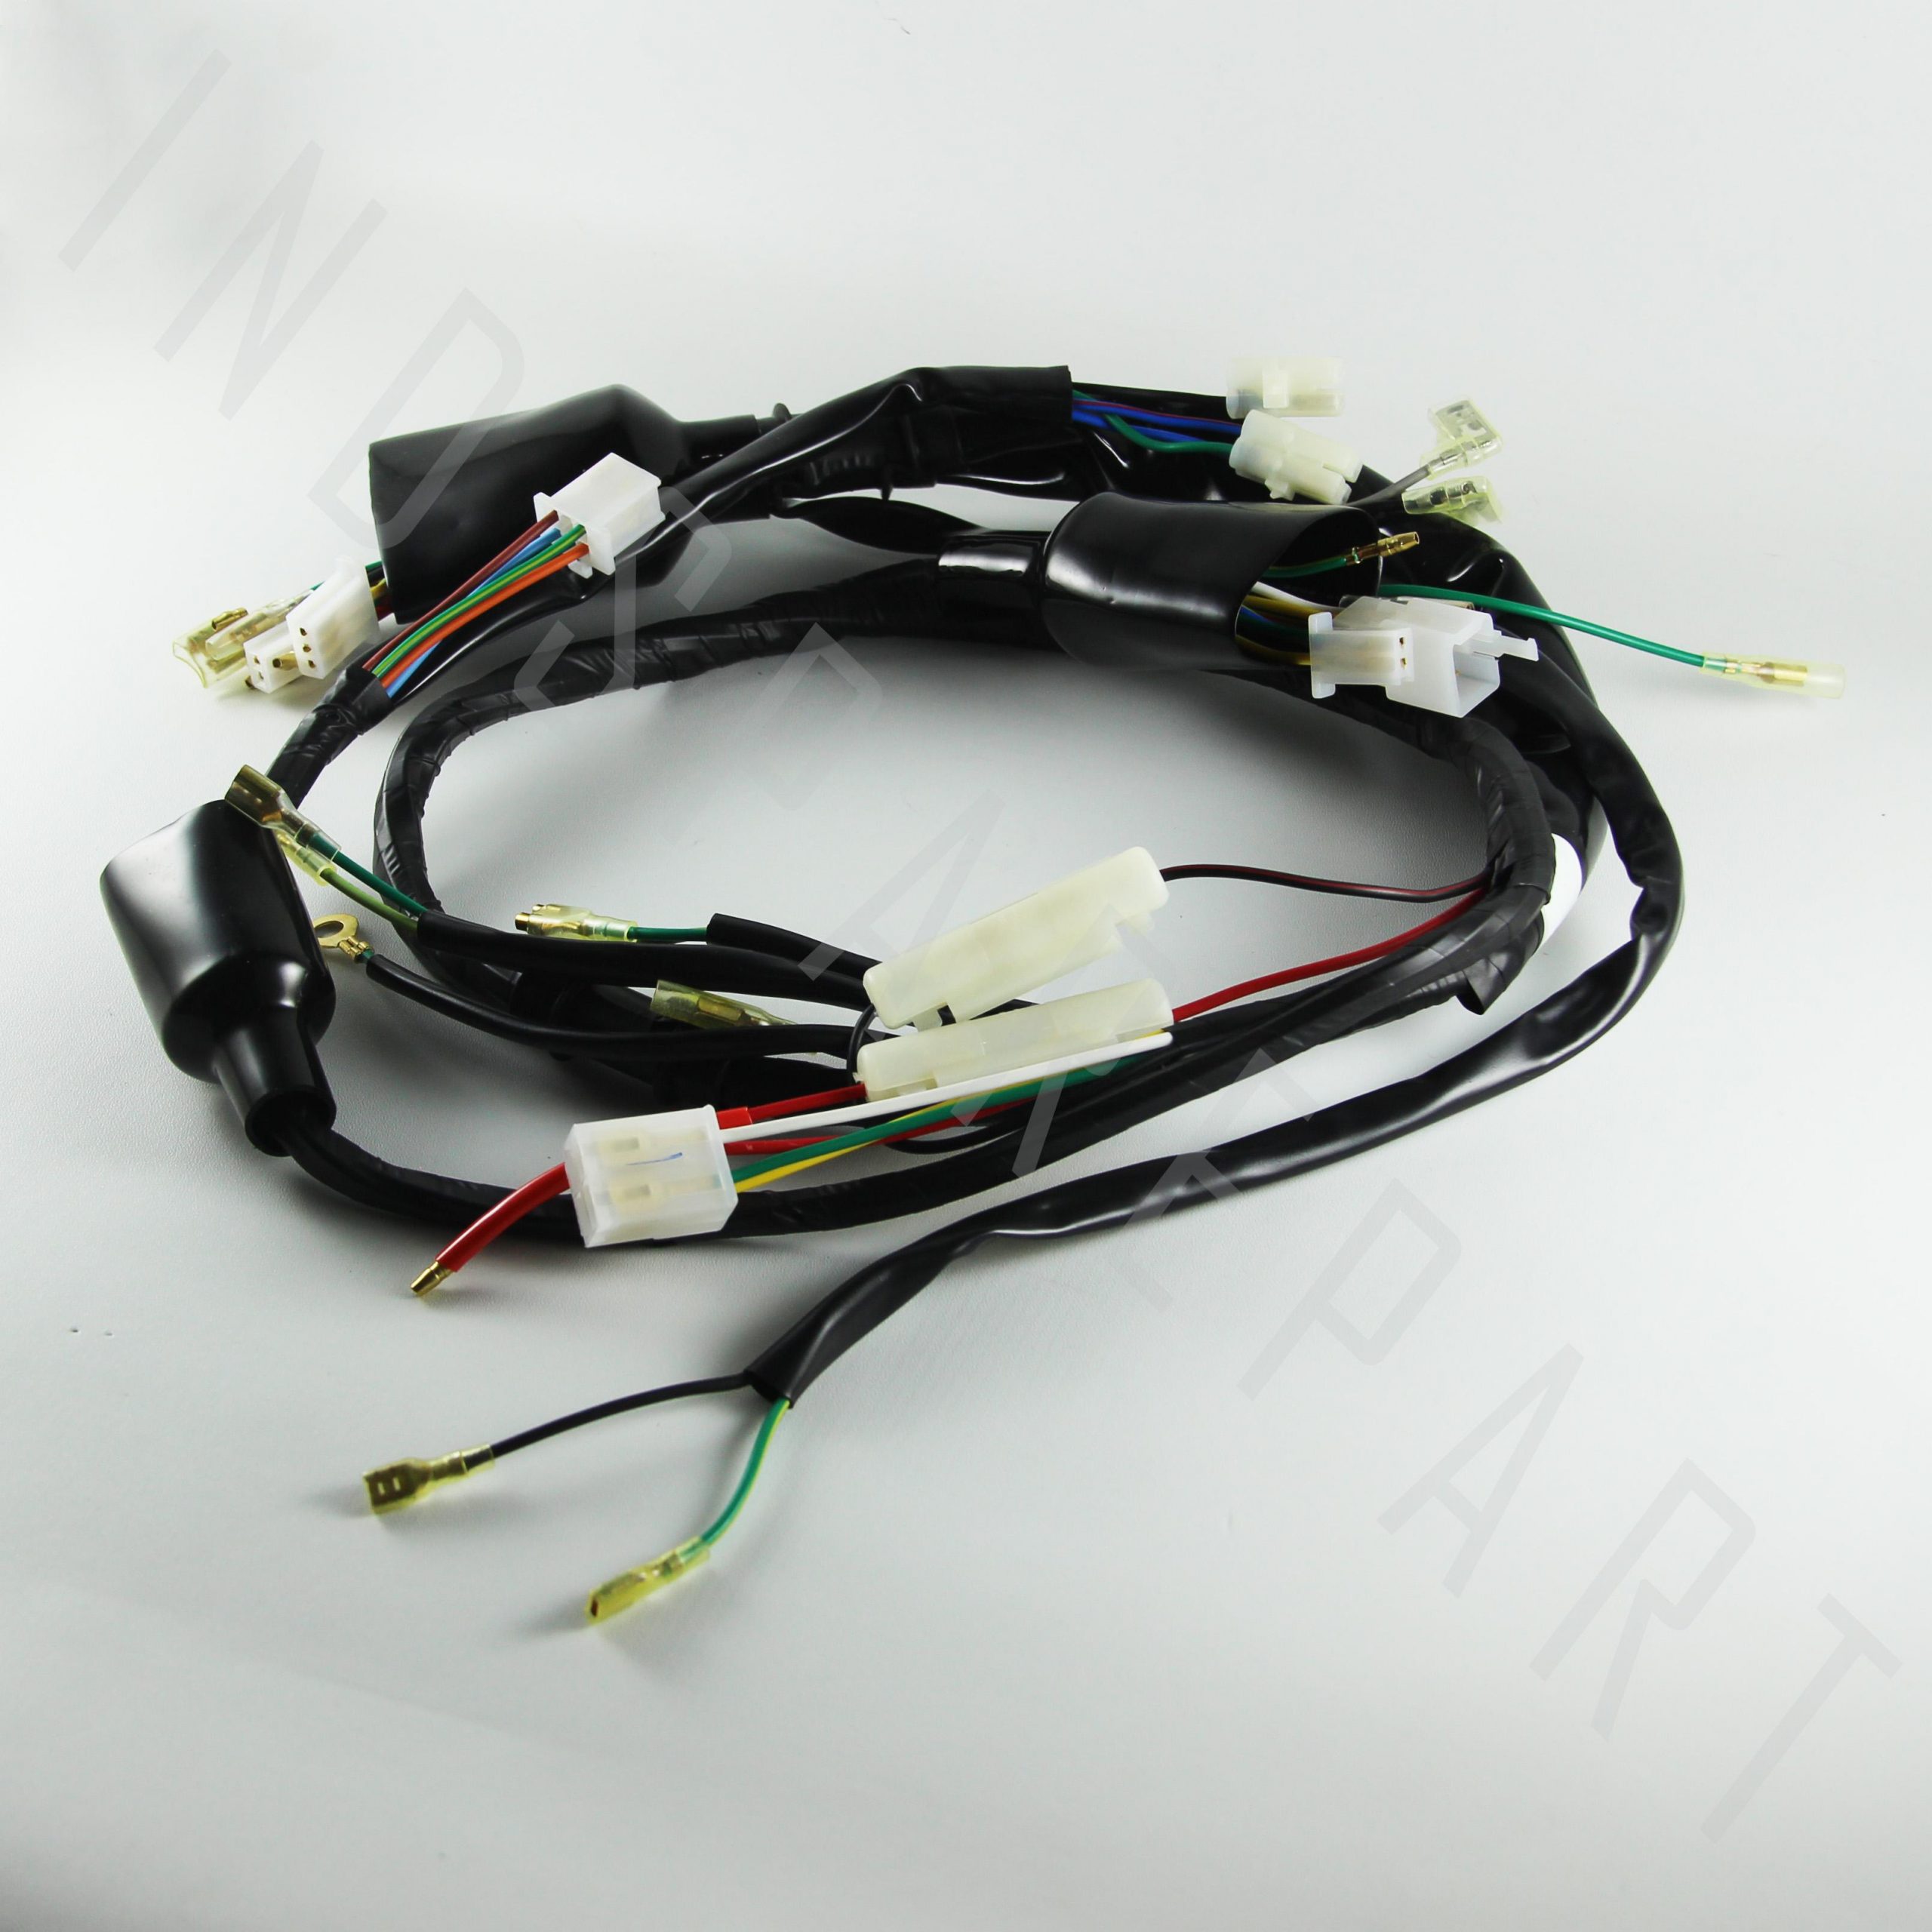  Kabel  Kable Cabel Cable Body Bodi Set Neotech GL  Max Pro  